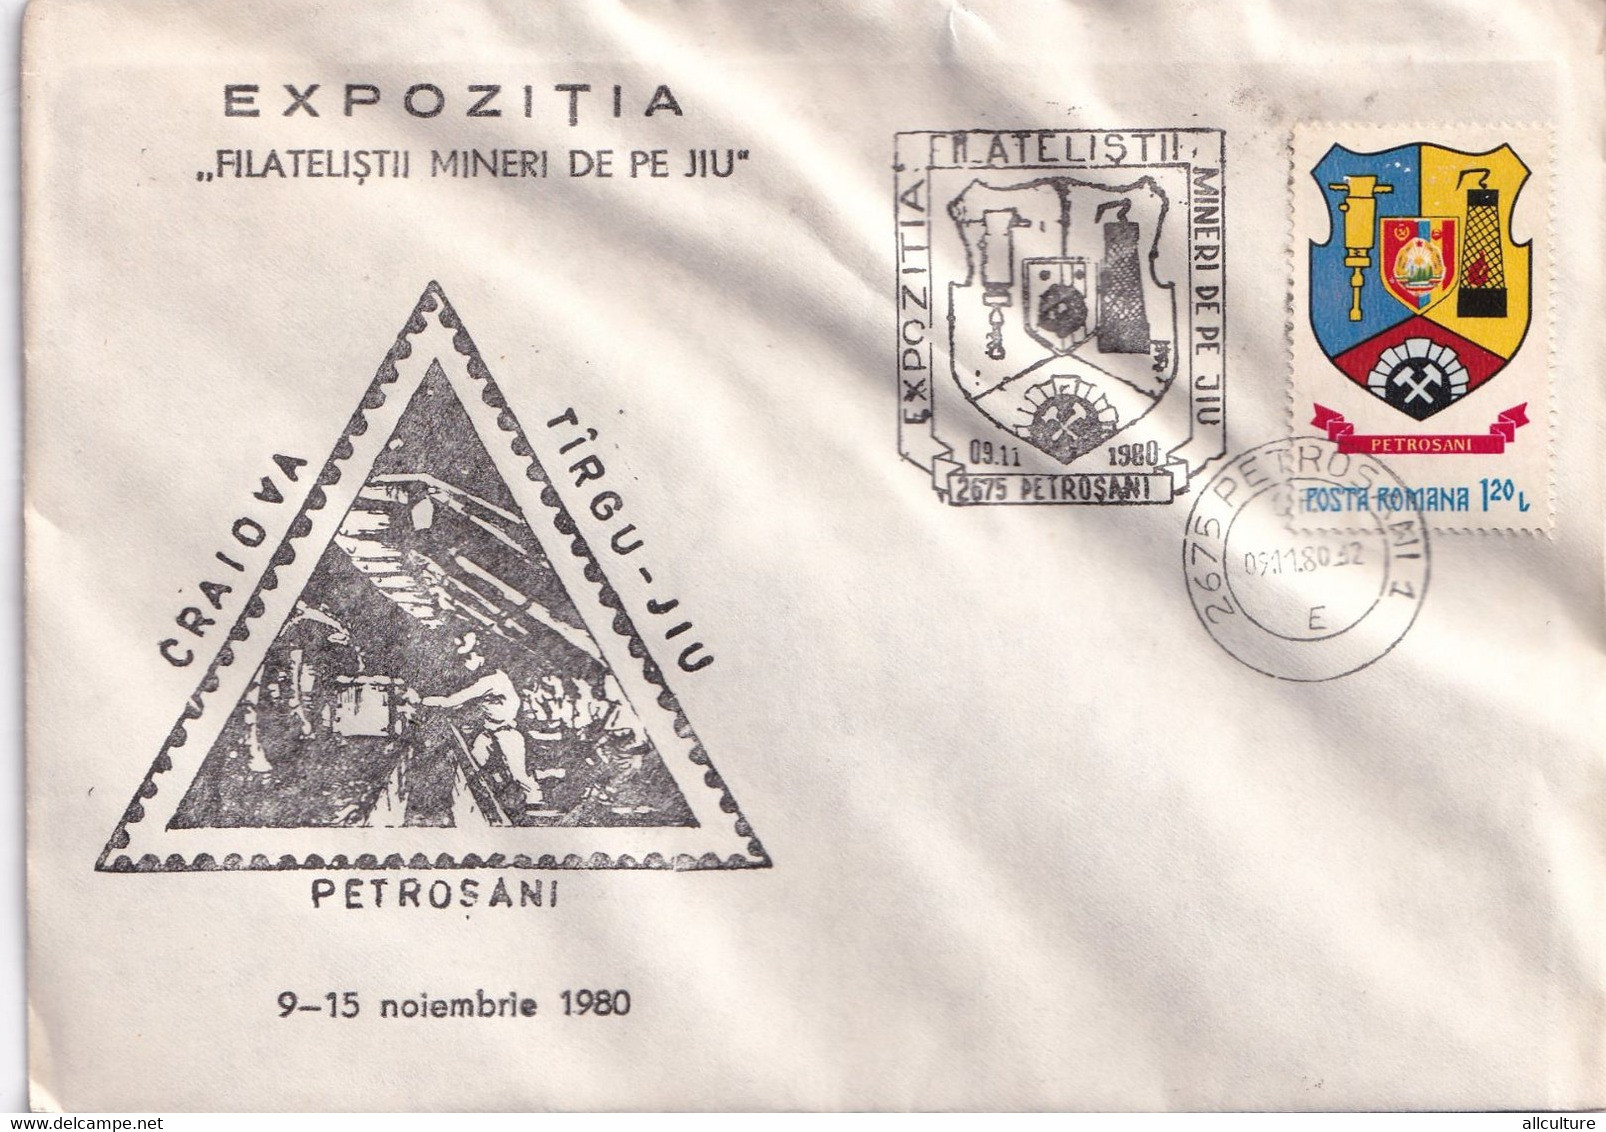 A2833 - Expozitia " Filatelistii Mineri De Pe Jiu" Targu Jiu, Craiova, Petrosani 1980 Romania - Covers & Documents